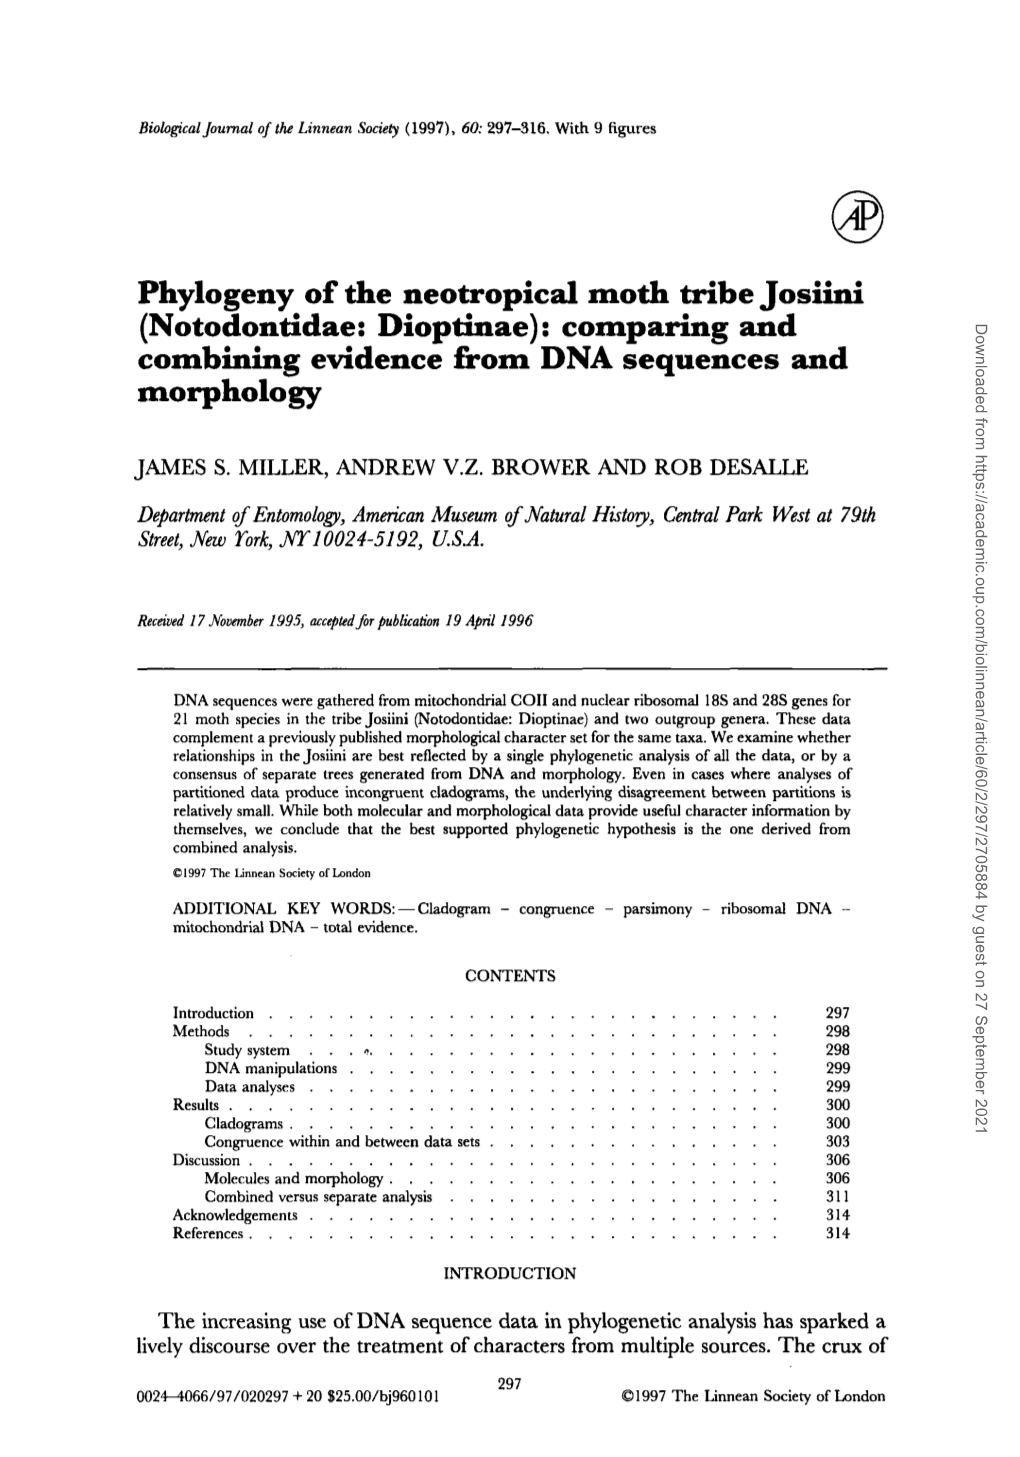 Phylogeny of the Neotropical Moth Tribe Josiini (Notodontidae